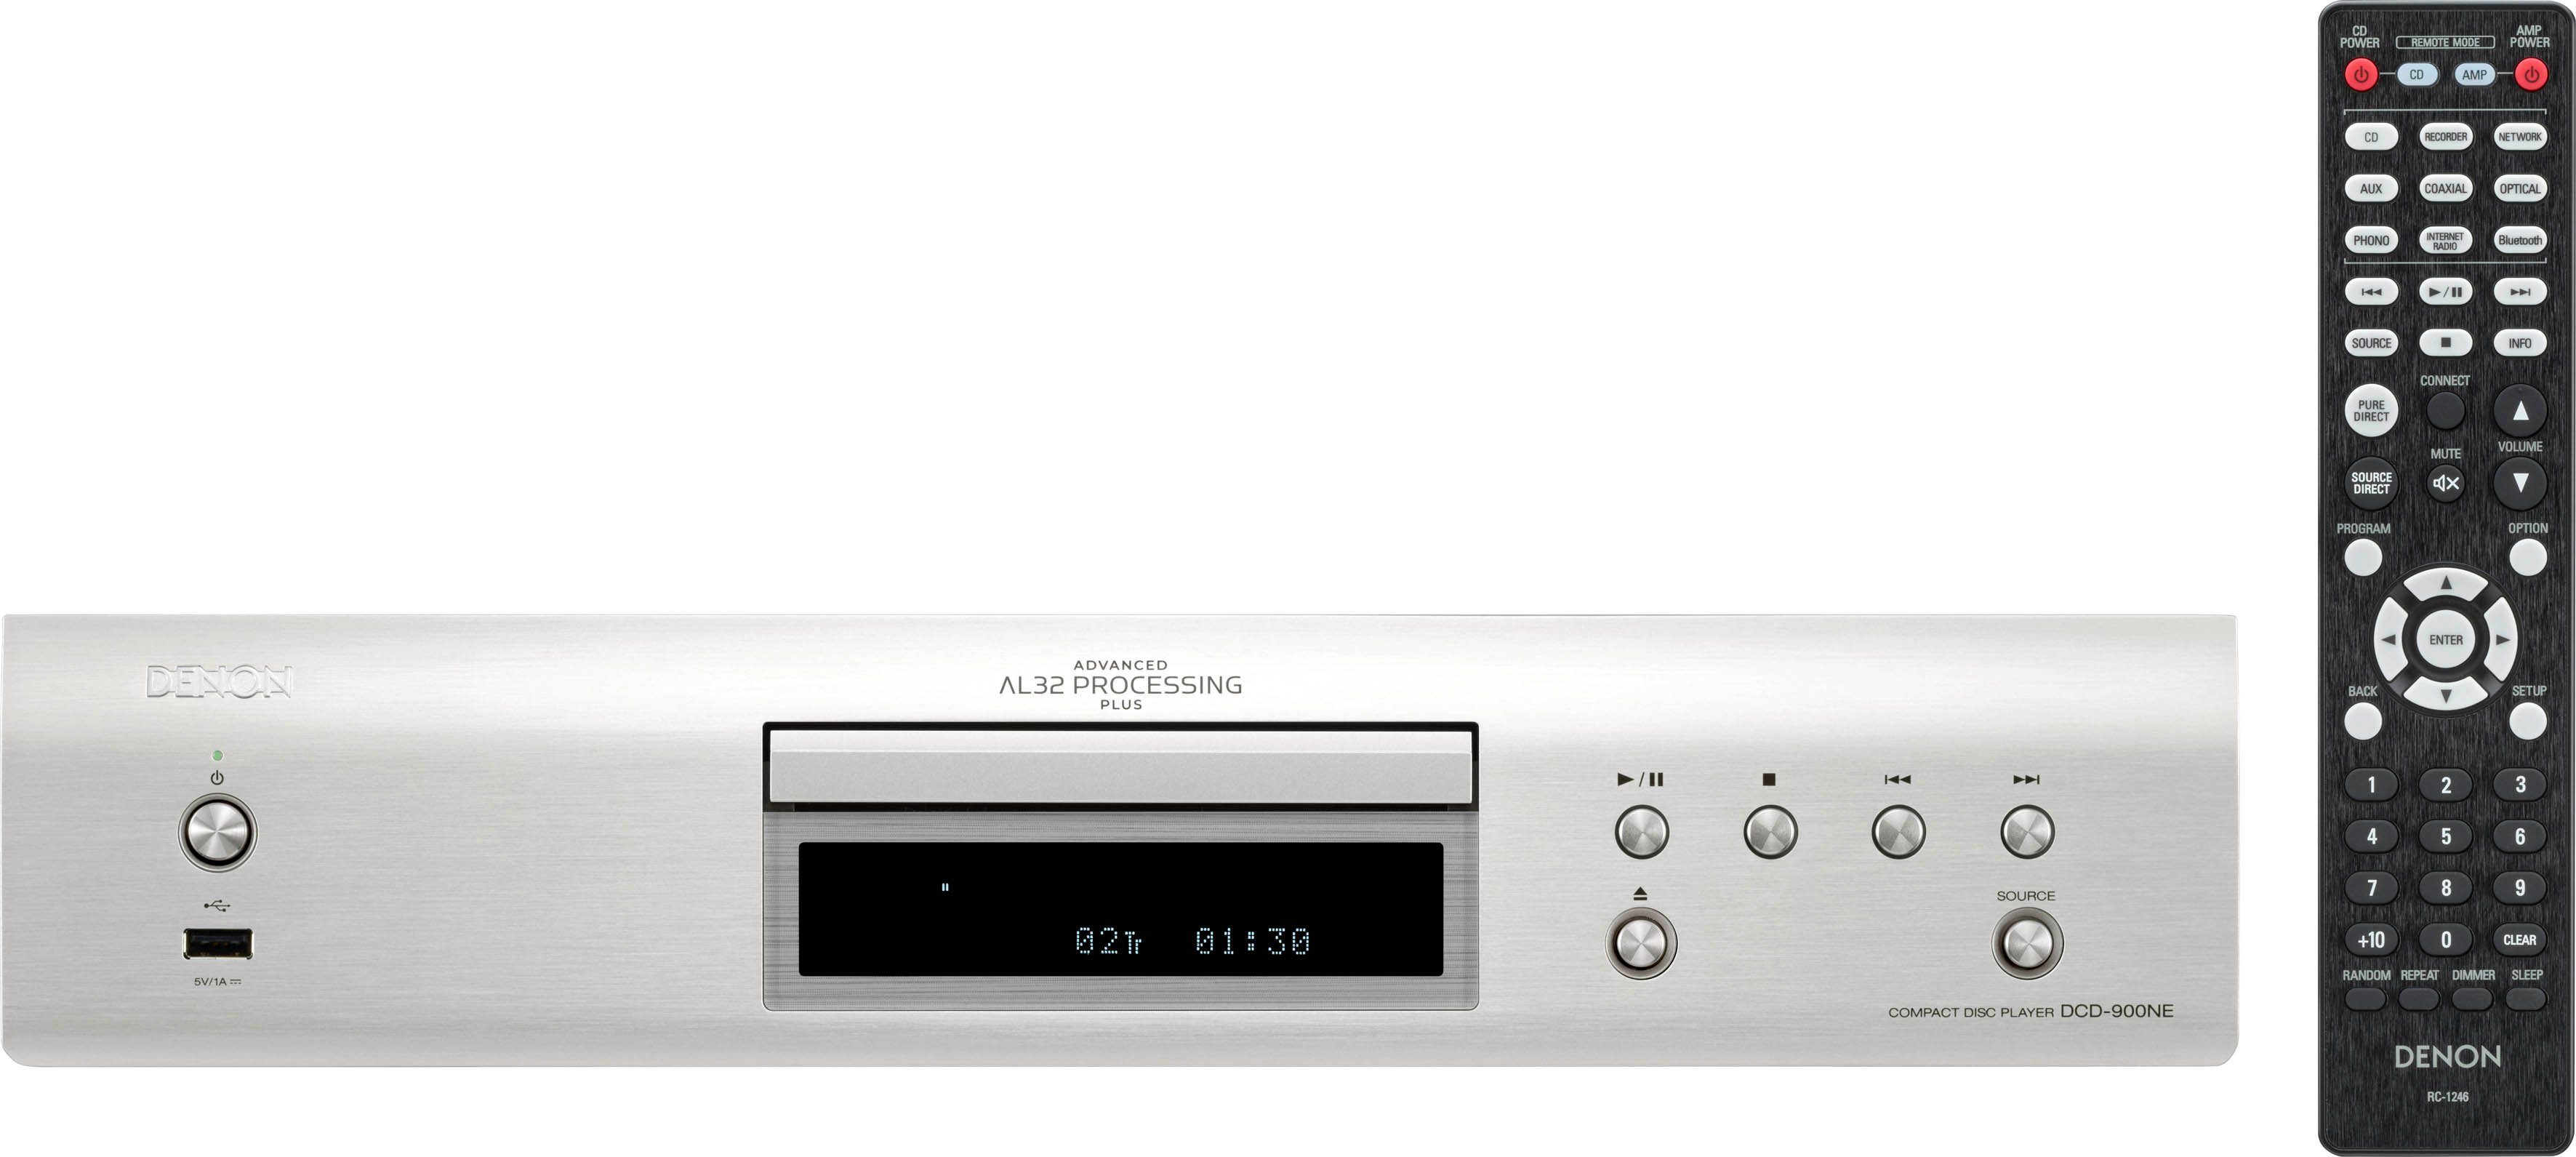 DCD-900NE Denon (USB-Audiowiedergabe) silber CD-Player